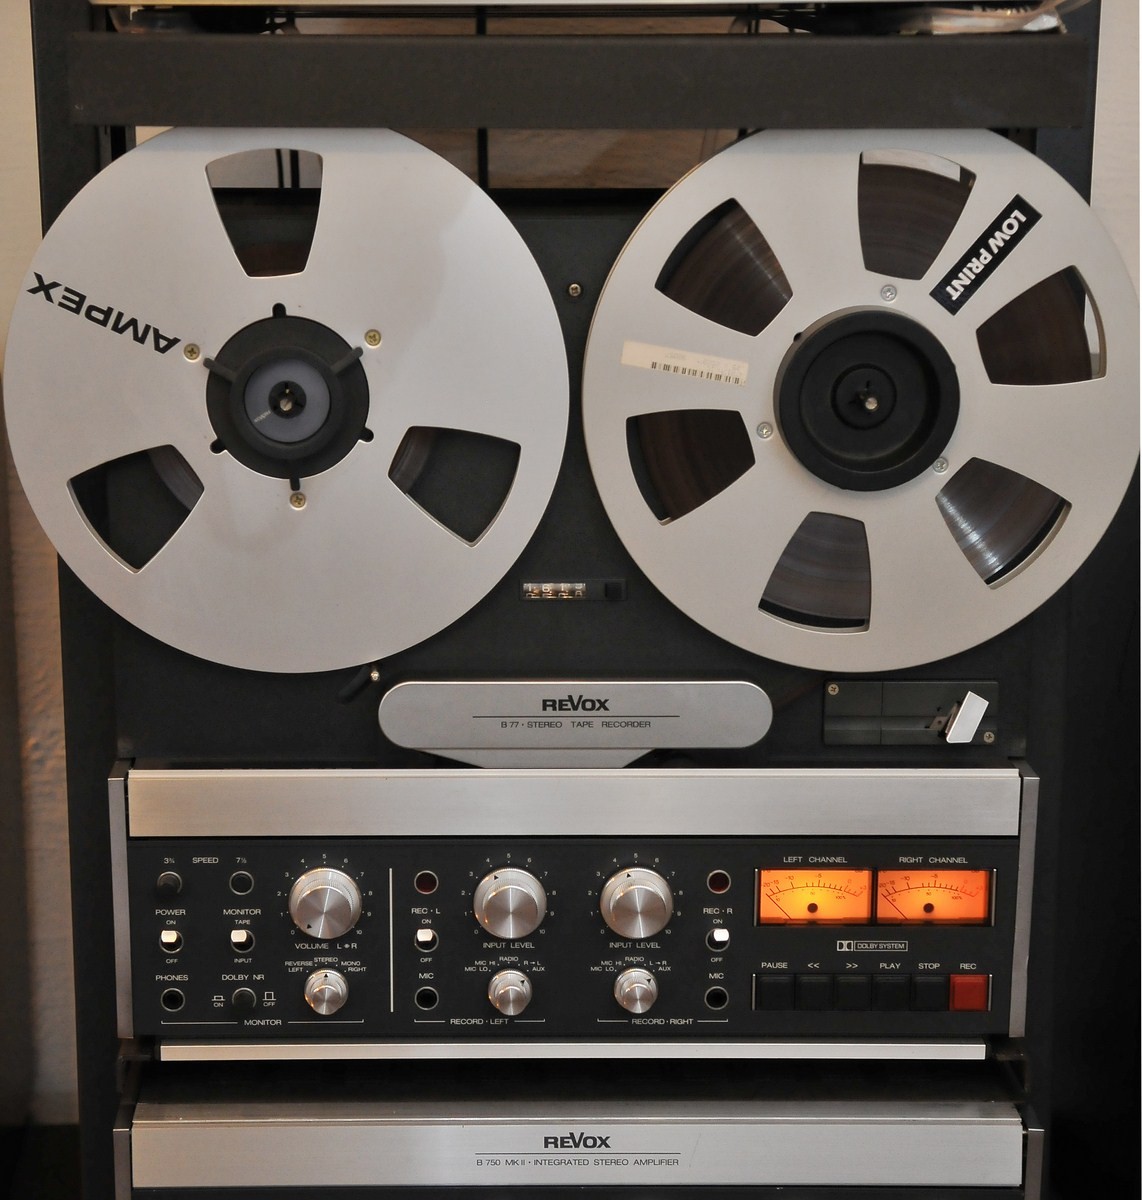 Revox B 77 reel to reel deck - Vintage Hi-Fi Audio Systems